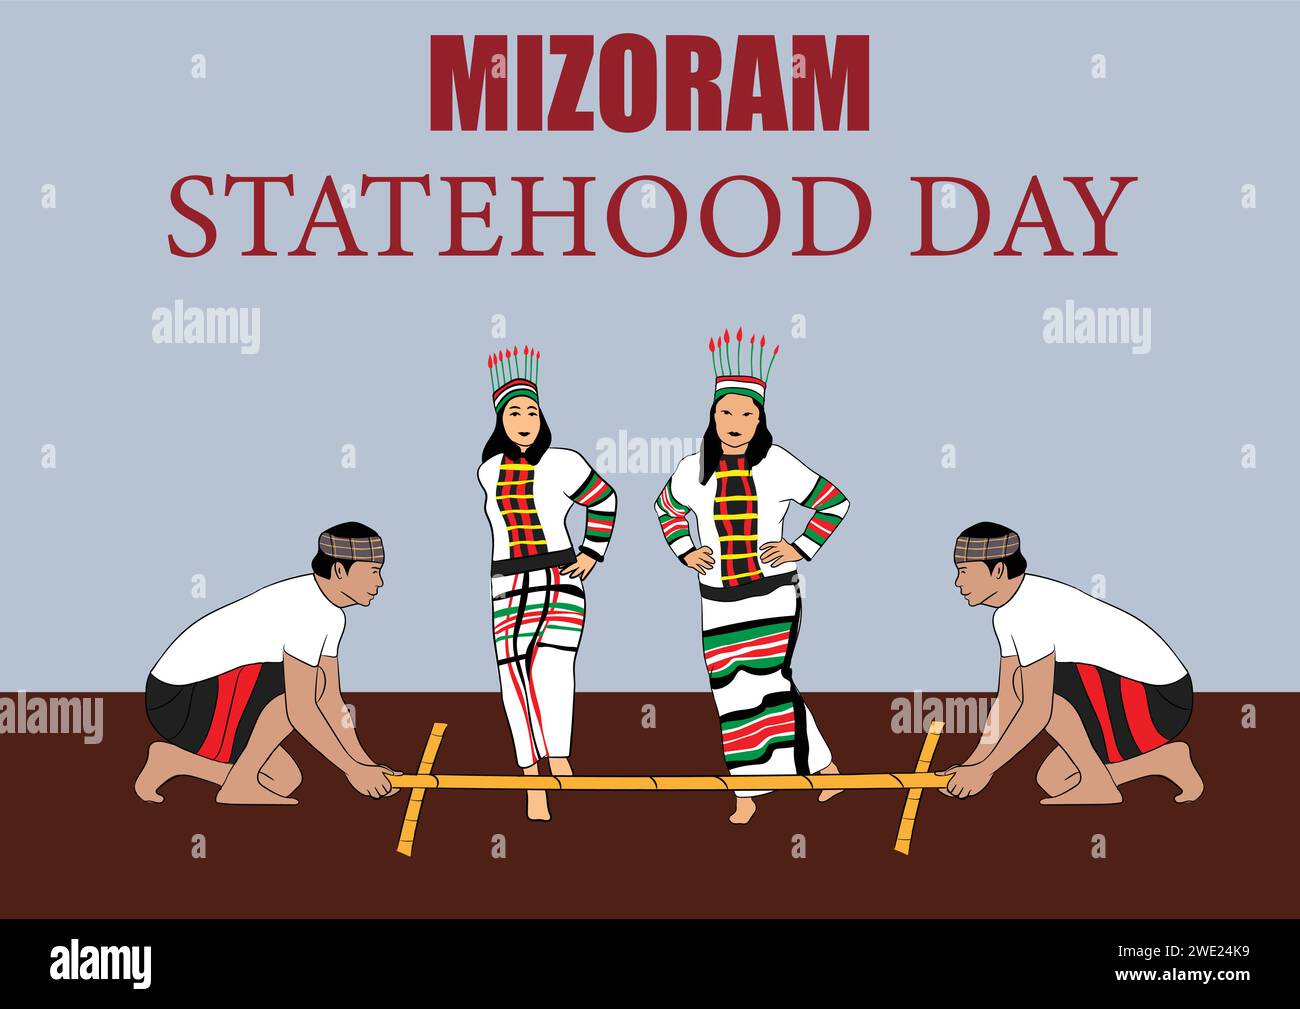 Vektor-Illustration Poster des Mizoram Statehood Day mit kuki Stamm Bambus Tanz. mizoram Staatentag, mizoram Staatentag Bild Stock Vektor